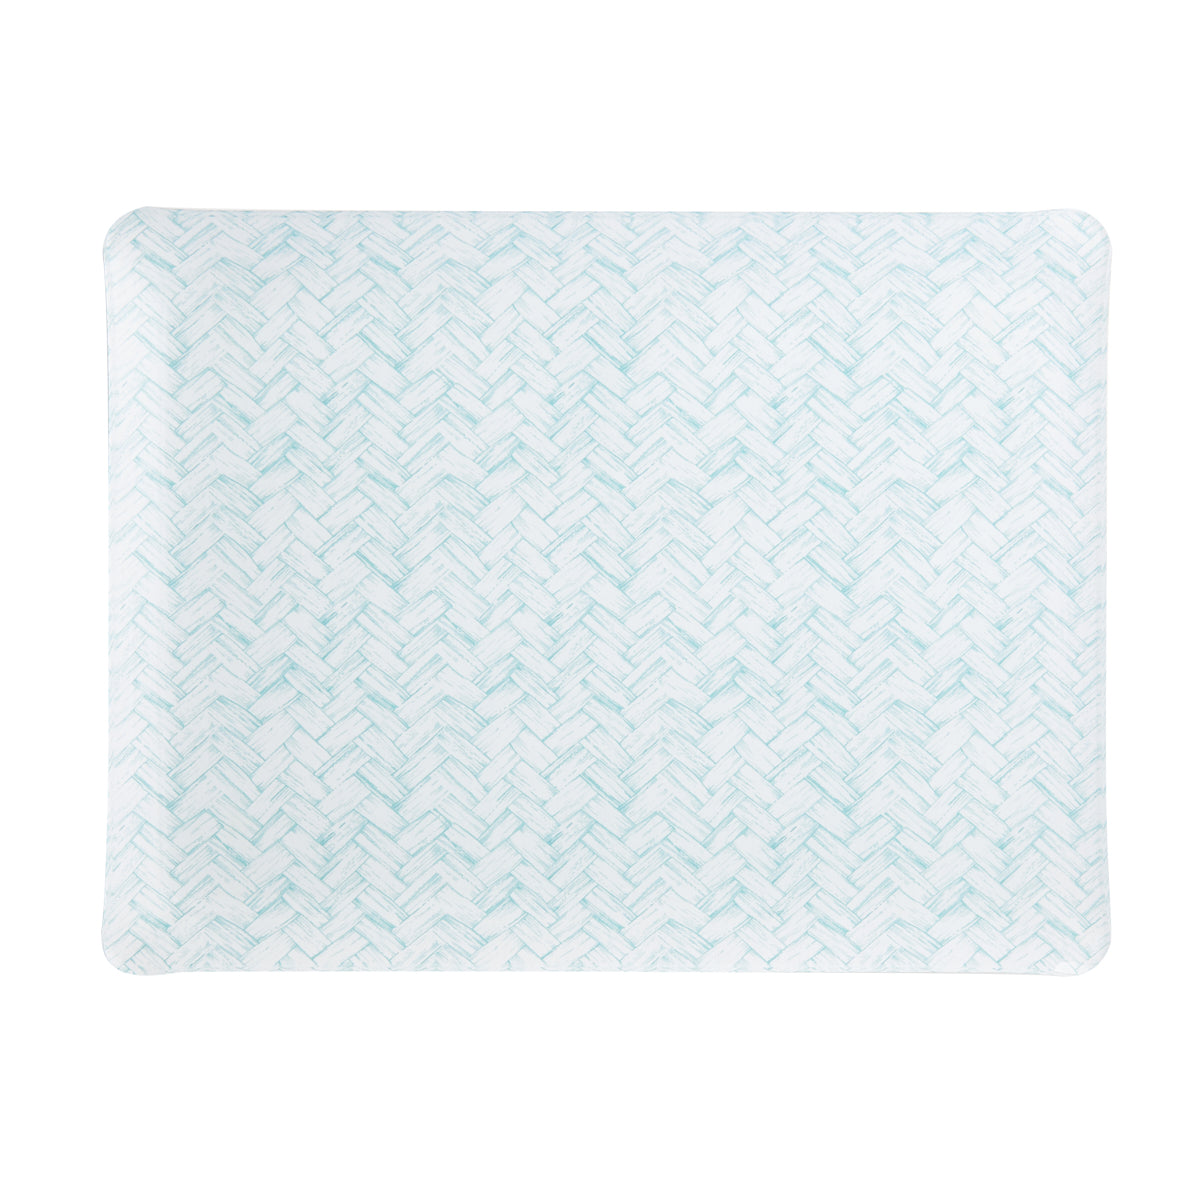 Fabric Tray Medium 37x28 - Aqua Basketweave